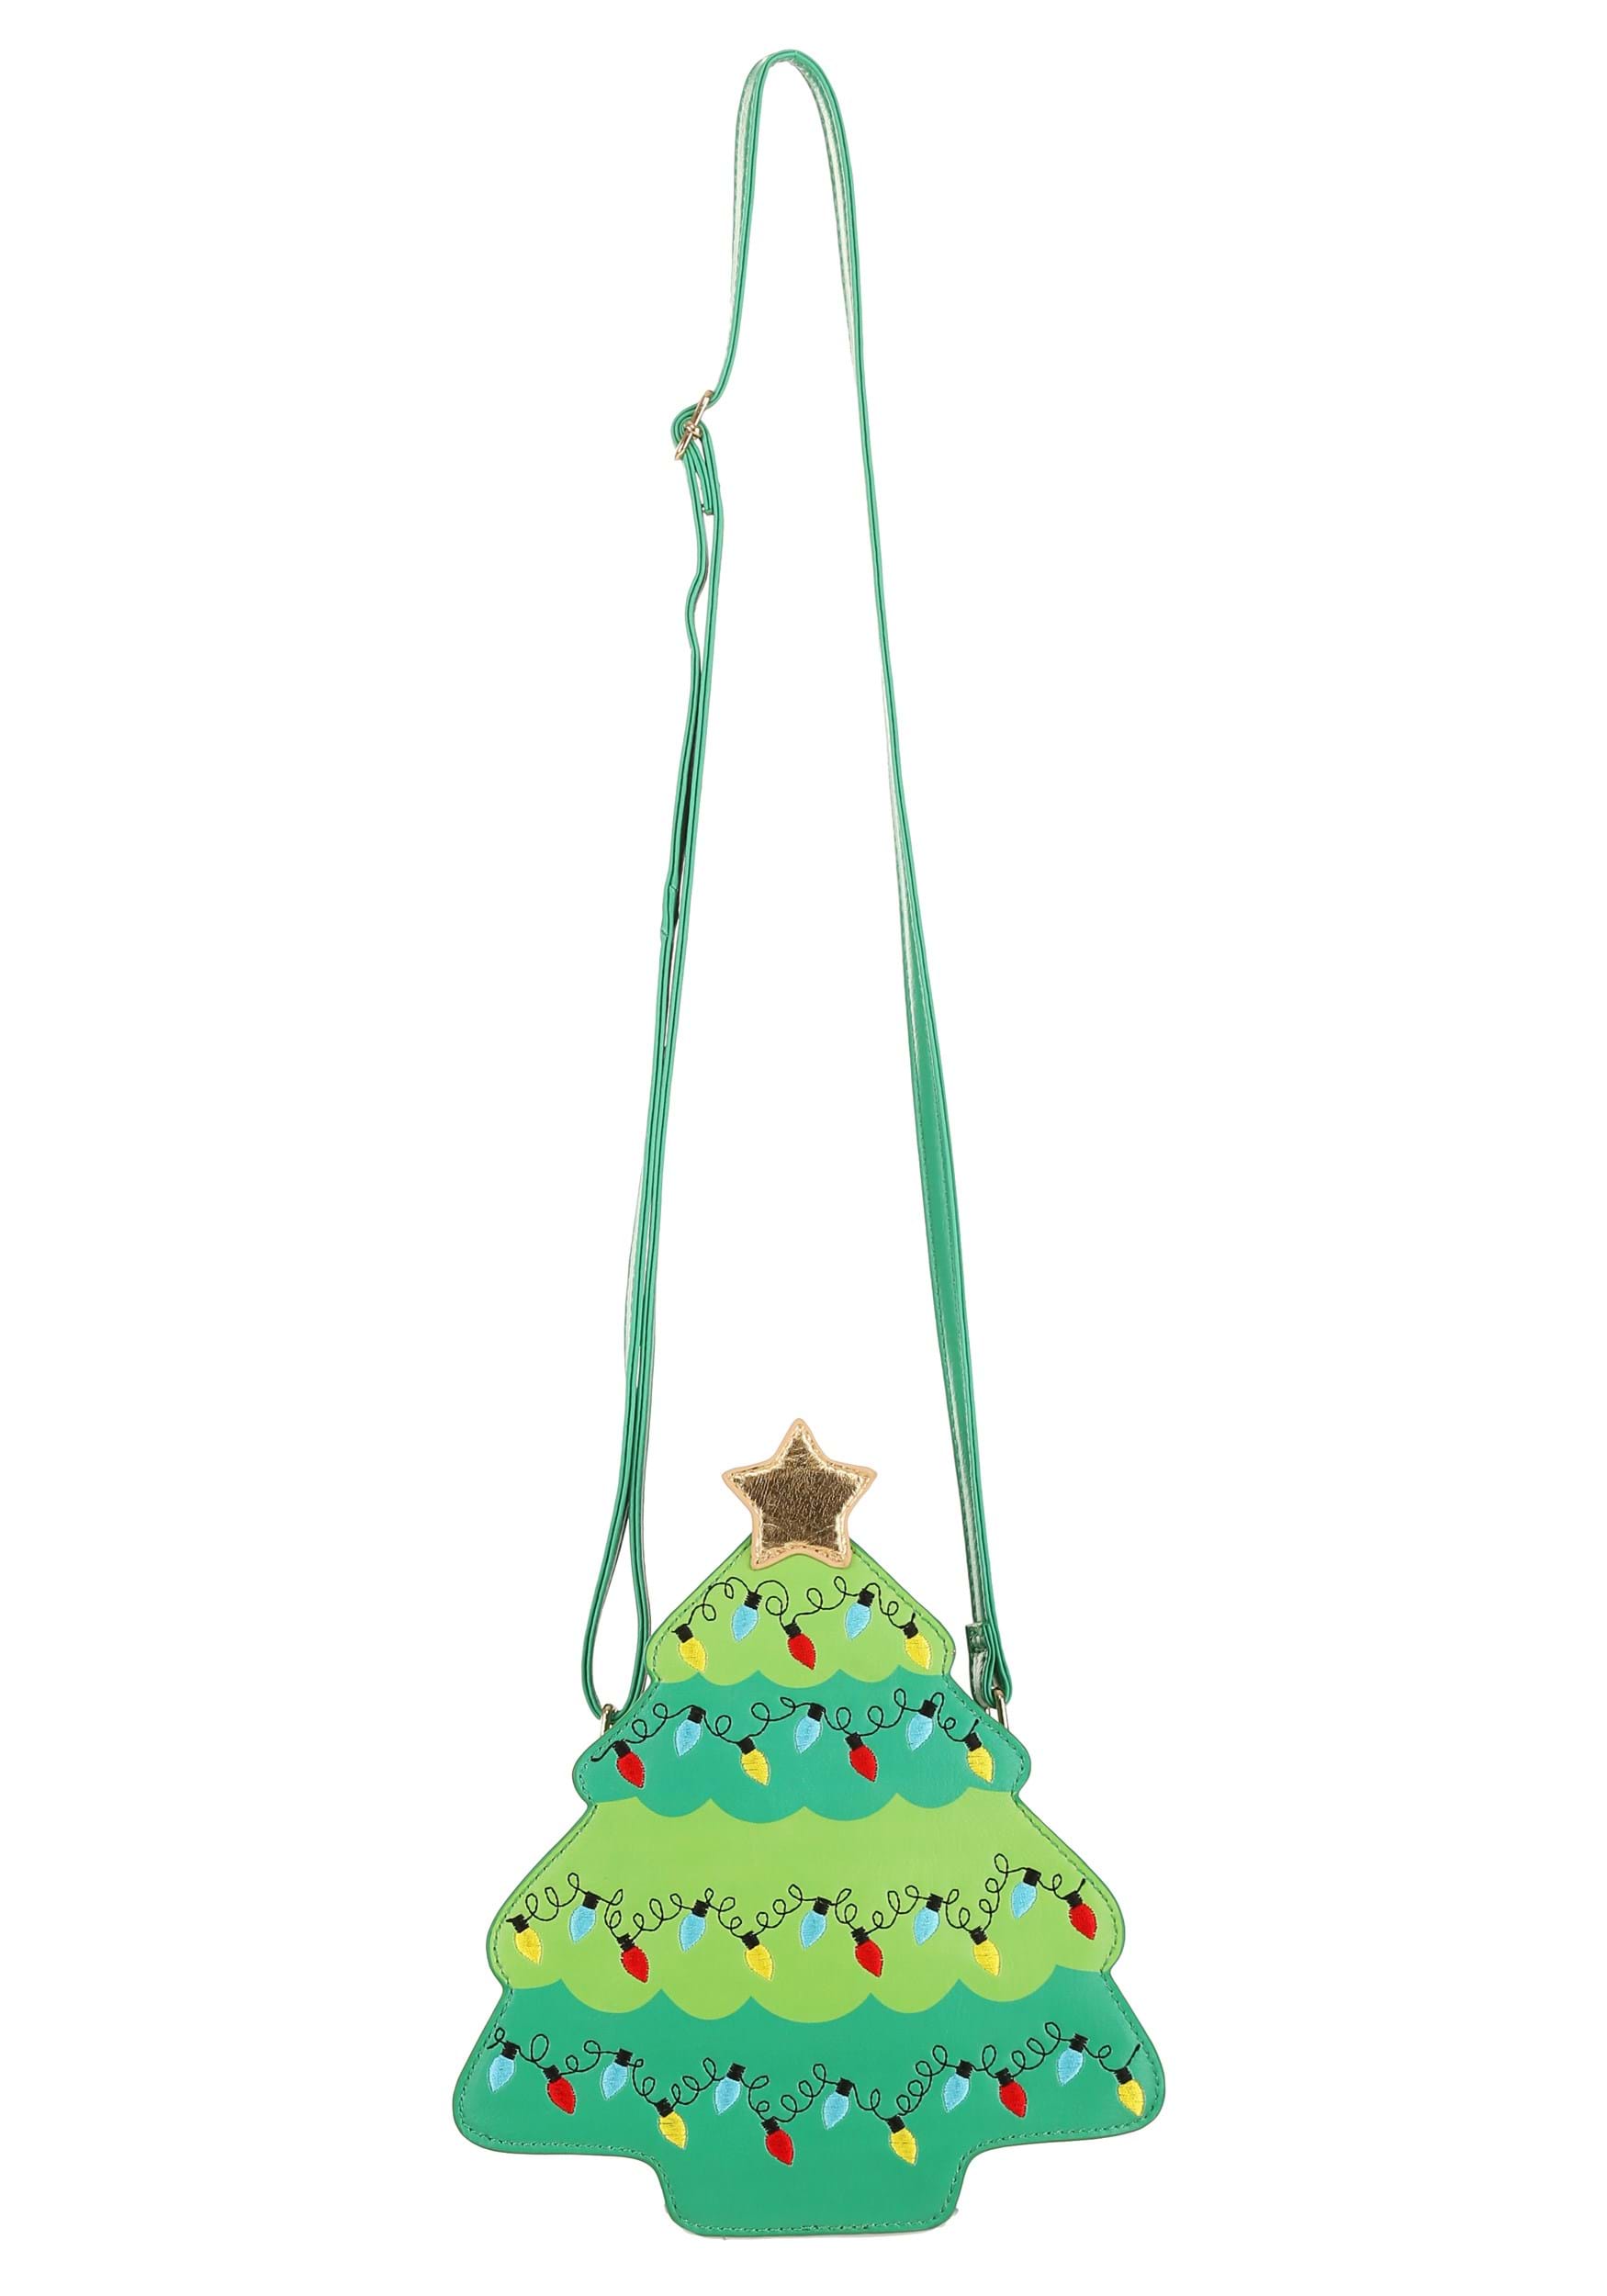  GLENLCWE Christmas Tree Purse Strap Crossbody Bag